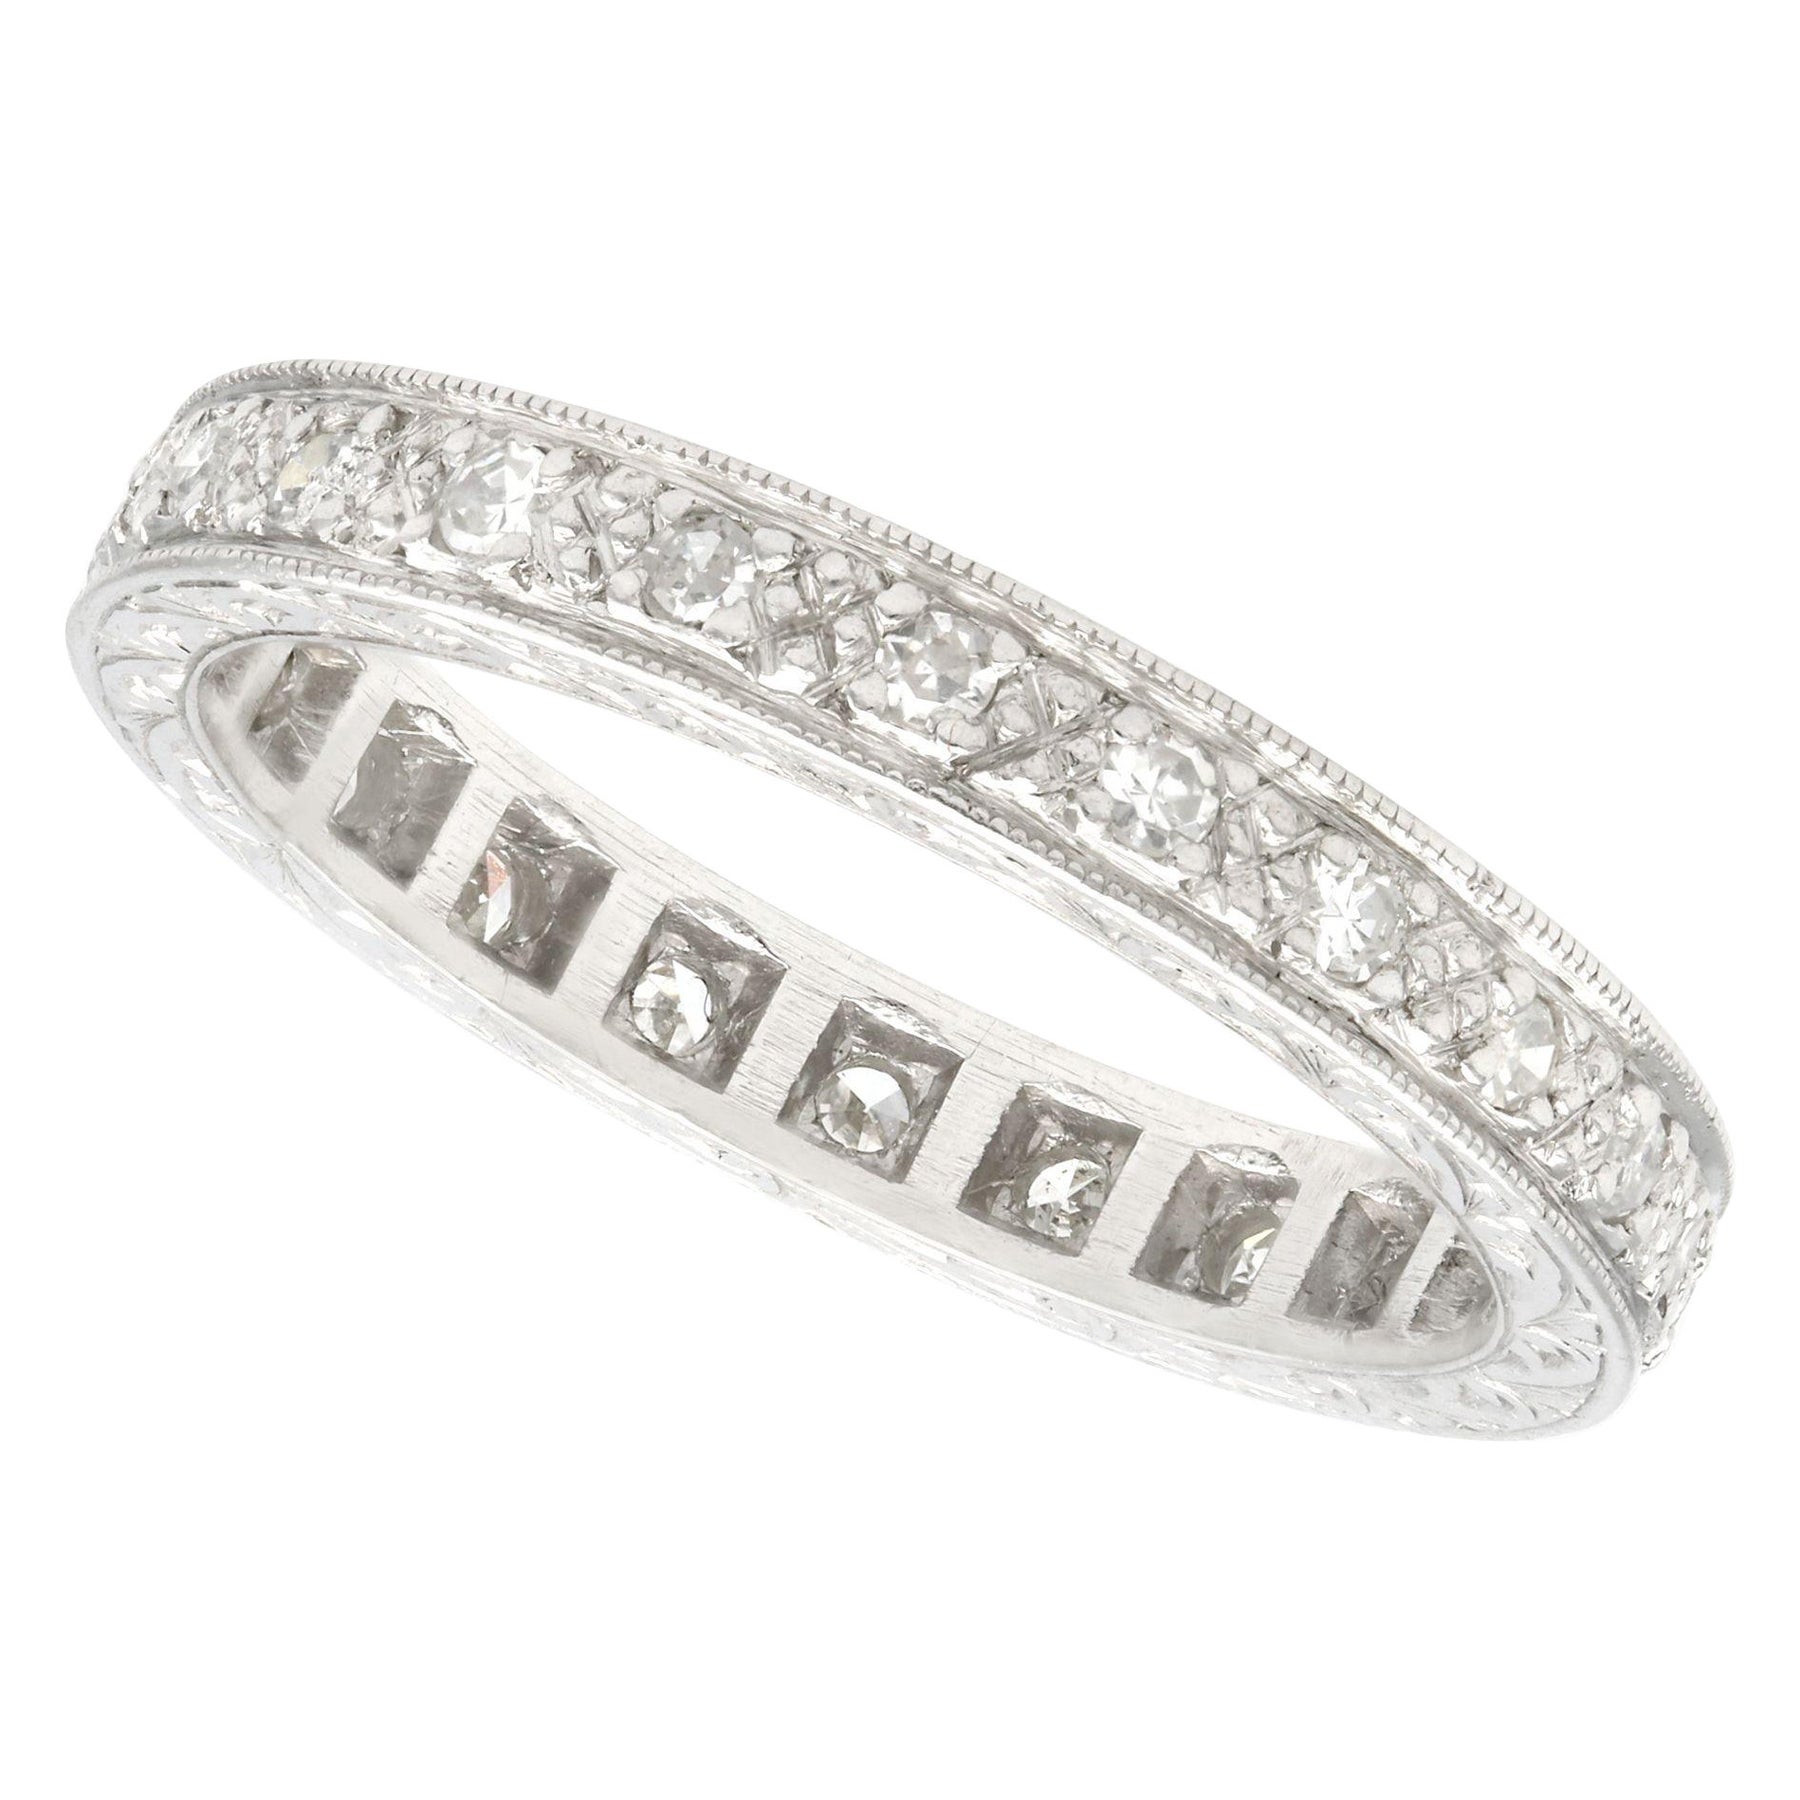 Vintage 1950s Diamond and Platinum Full Eternity Ring